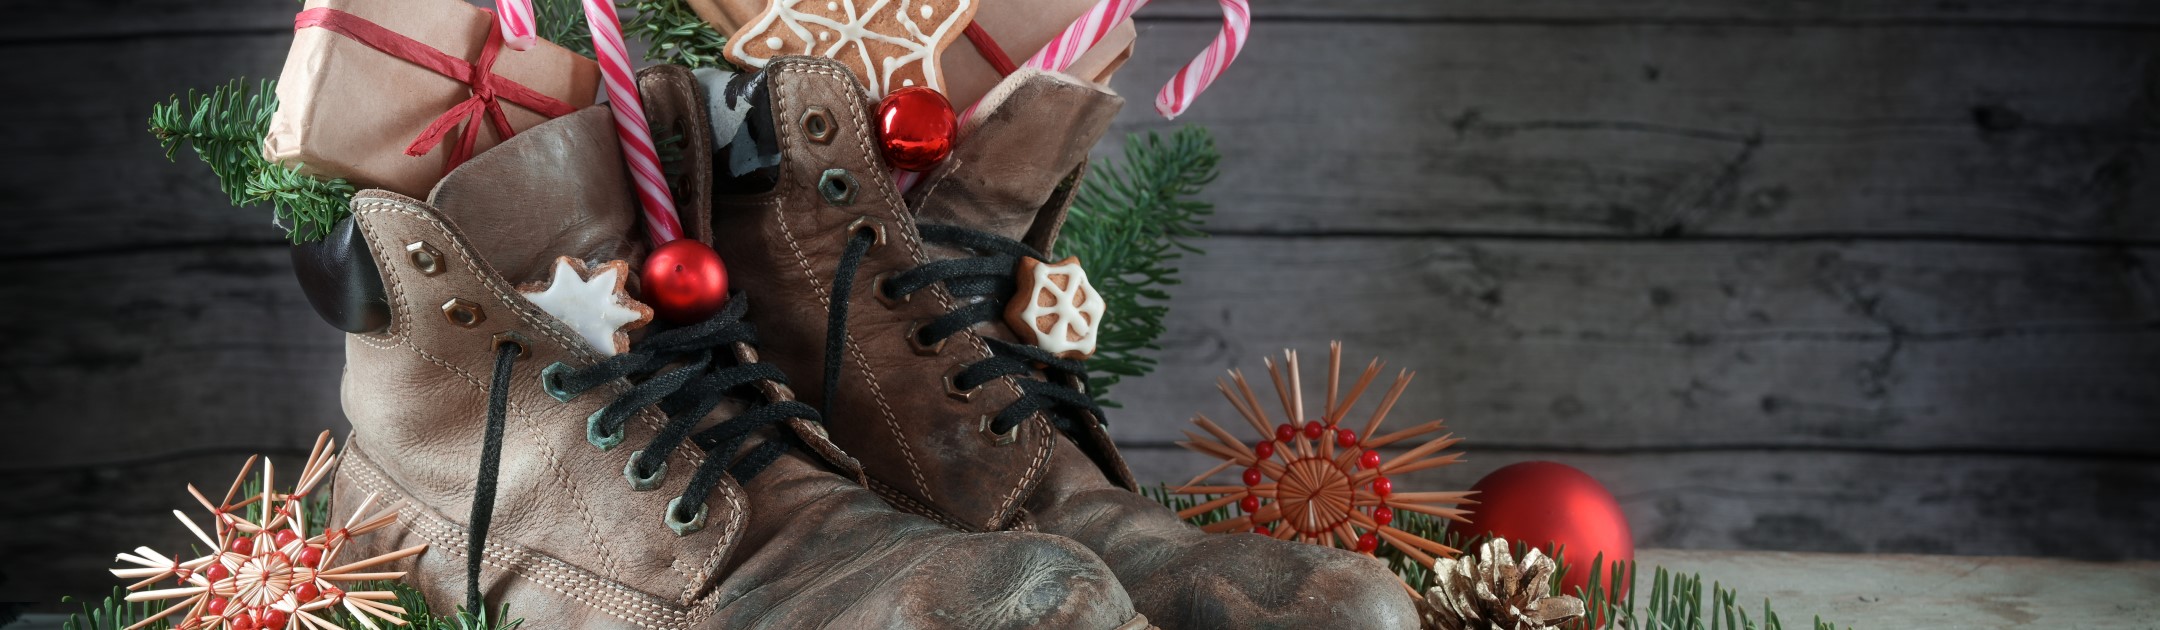 Elder Seduce Anthology Clean Santa Boots | pedag